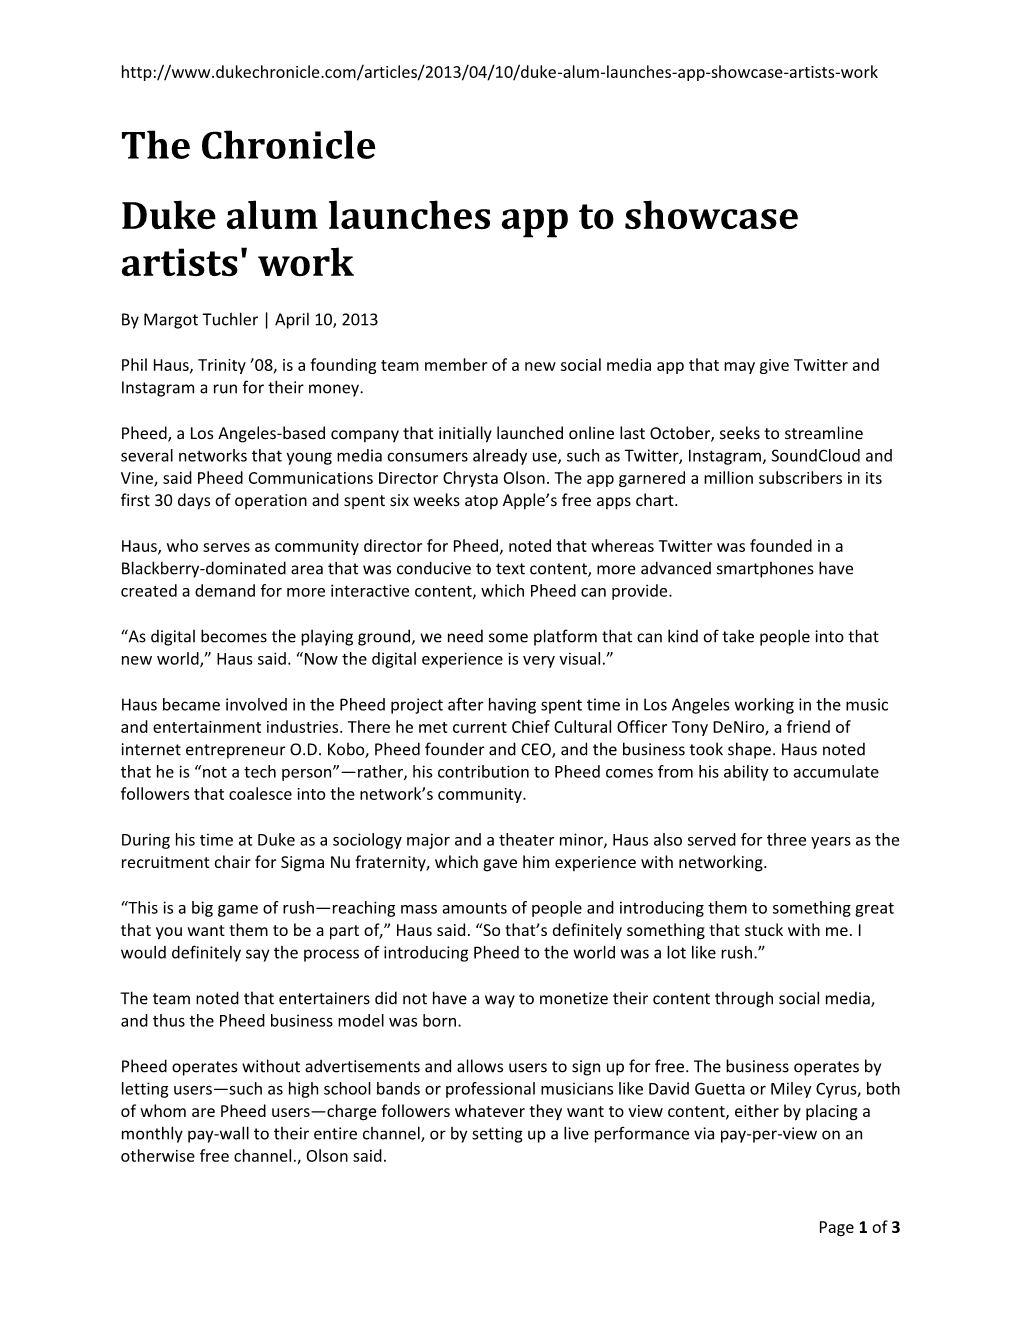 The Chronicle Duke Alum Launches App to Showcase Artists' Work